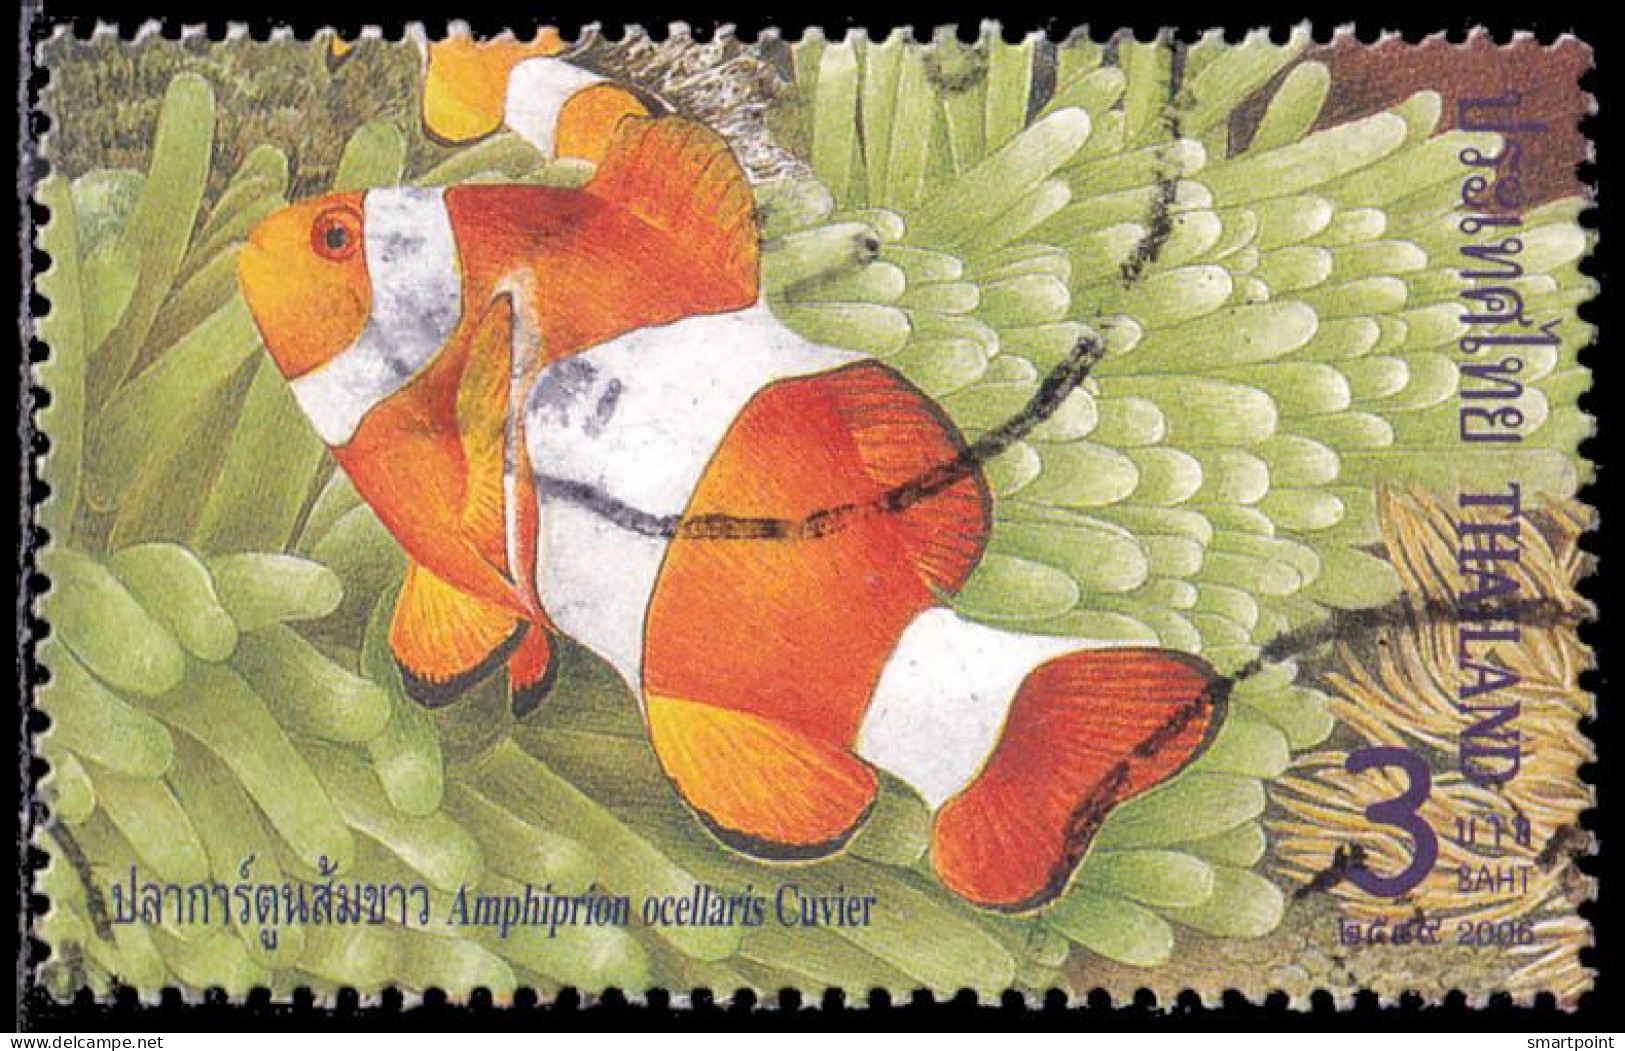 Thailand Stamp 2006 Anemonefish 3 Baht - Used - Thailand